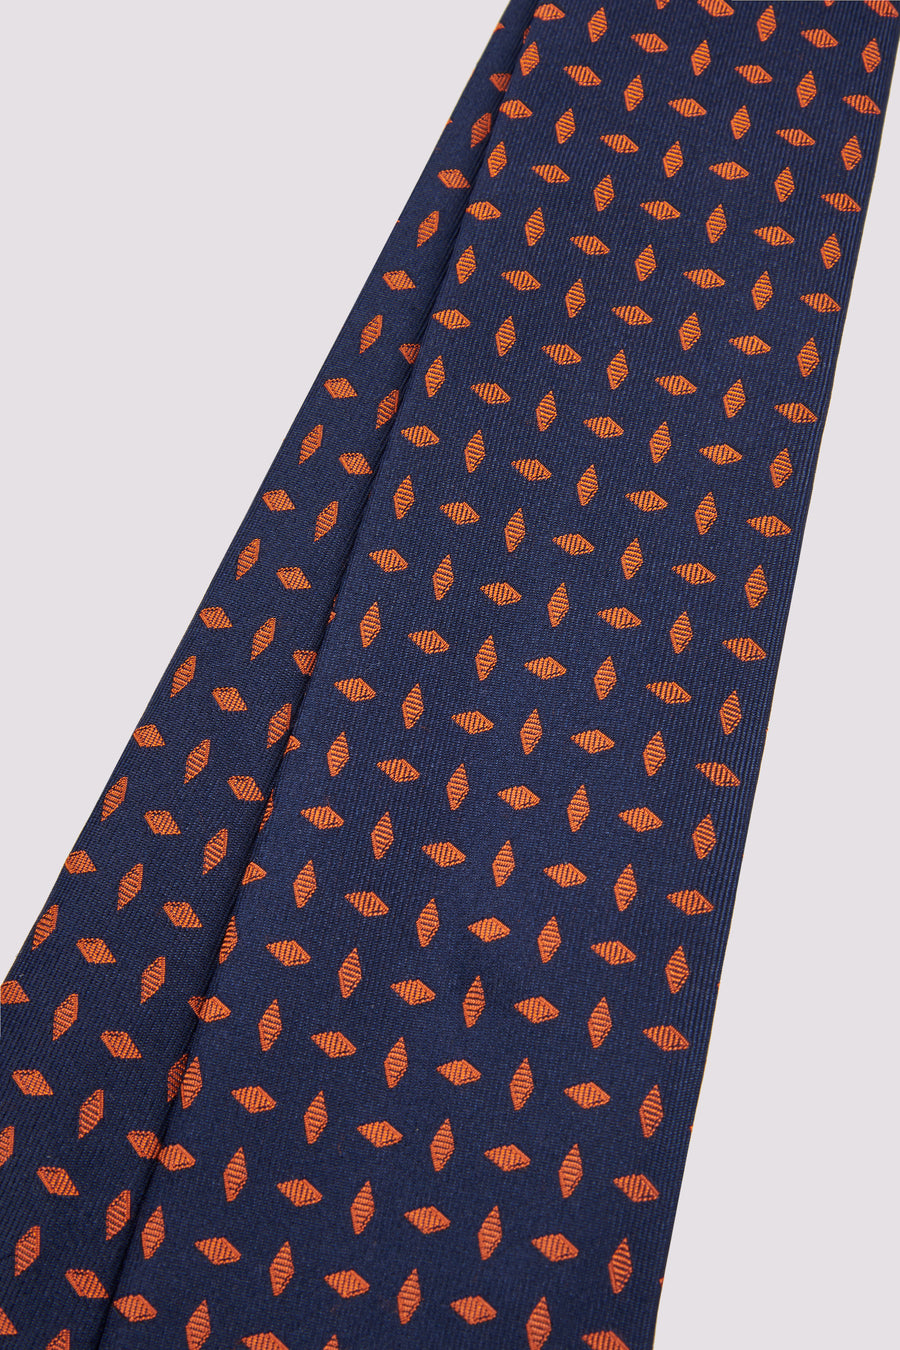 100% Silk Tie Orange Diamond Pattern Orange